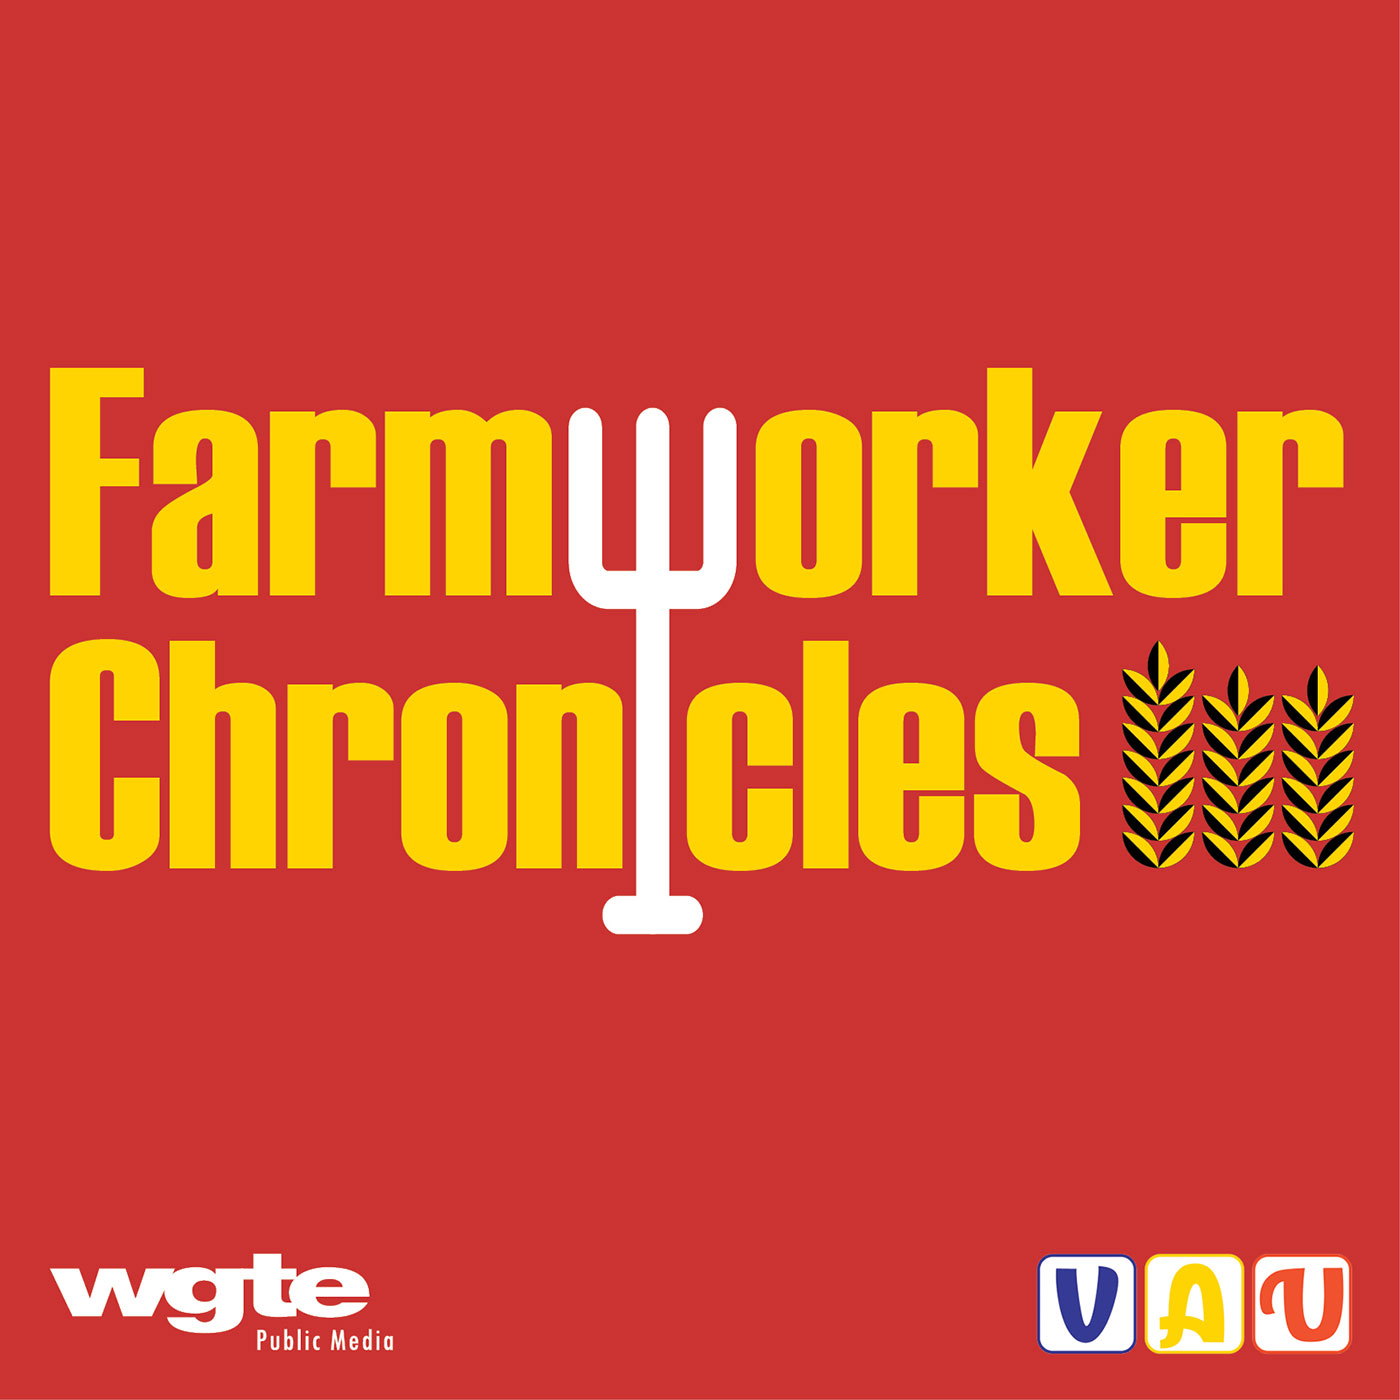 VAU-Farmworker-Chronicles-1400×1400